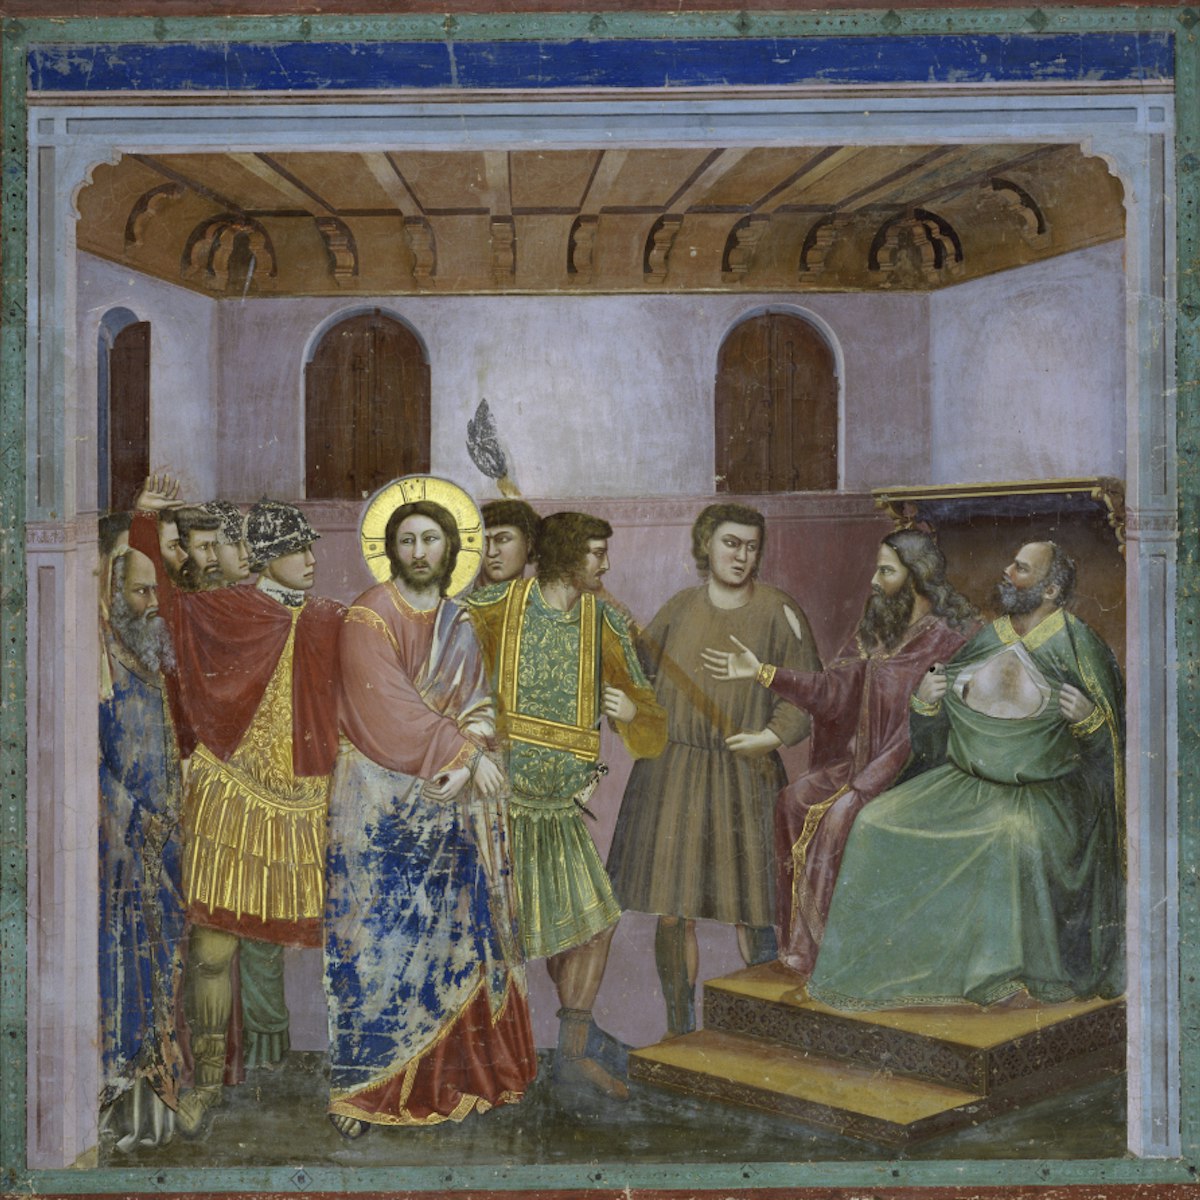 Jesus Before Caiaphas by Italian Artist Giotto di Bondone, fresco